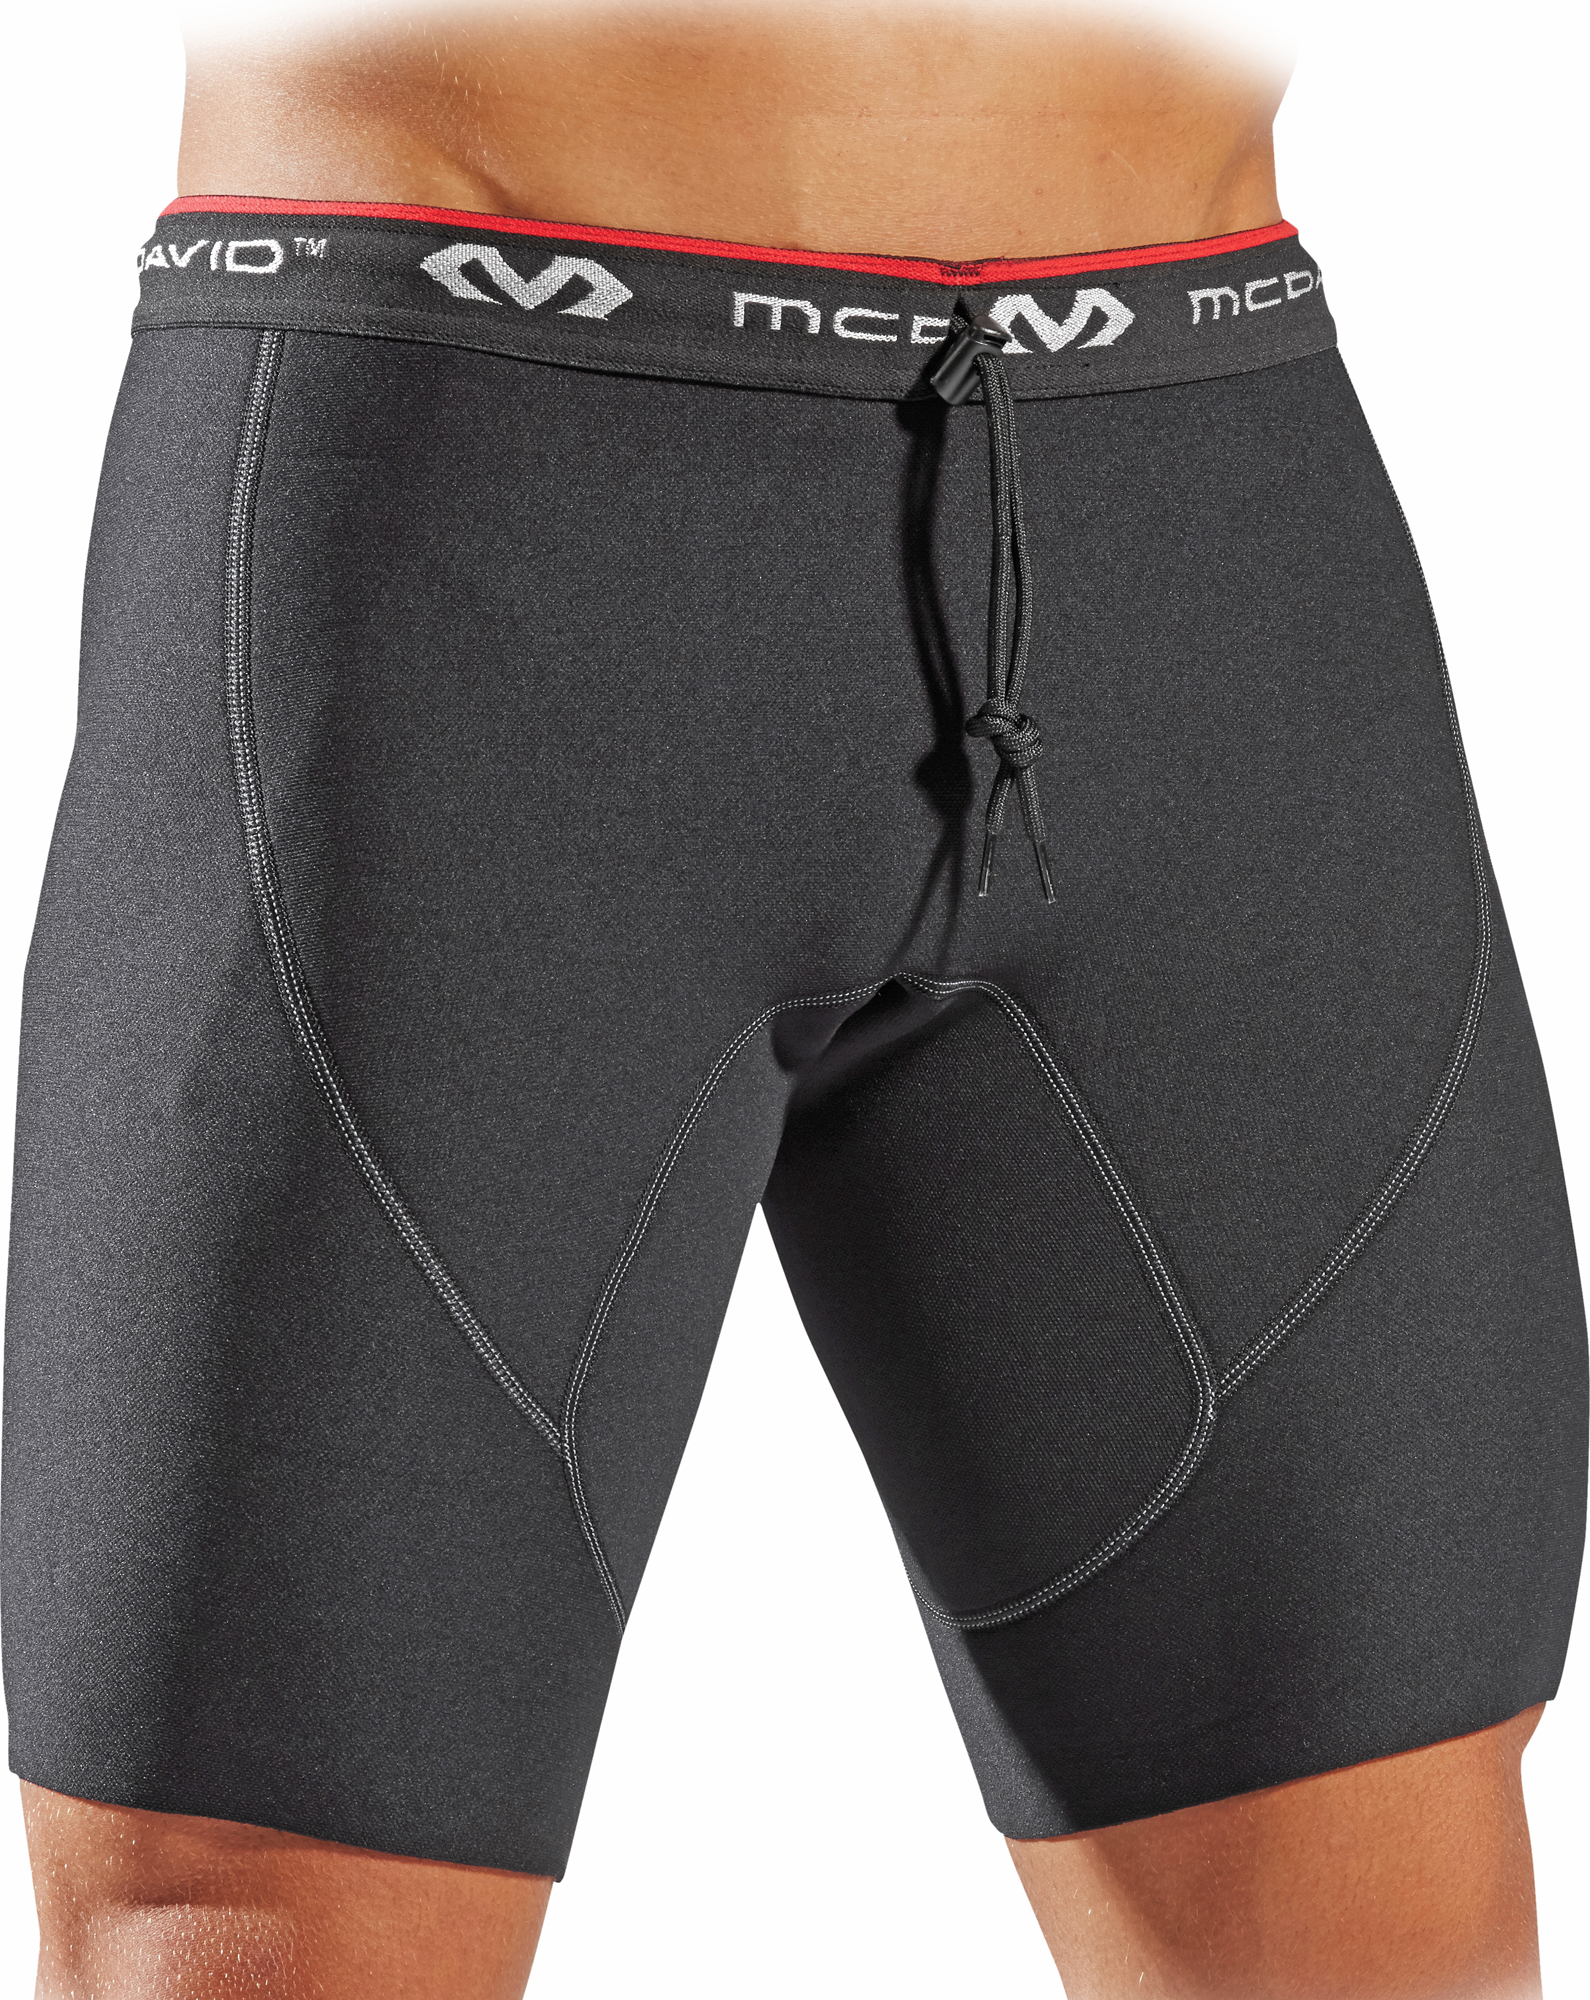 E114167 McDavid Adult Level 2 Neoprene Shorts w/Drawstring